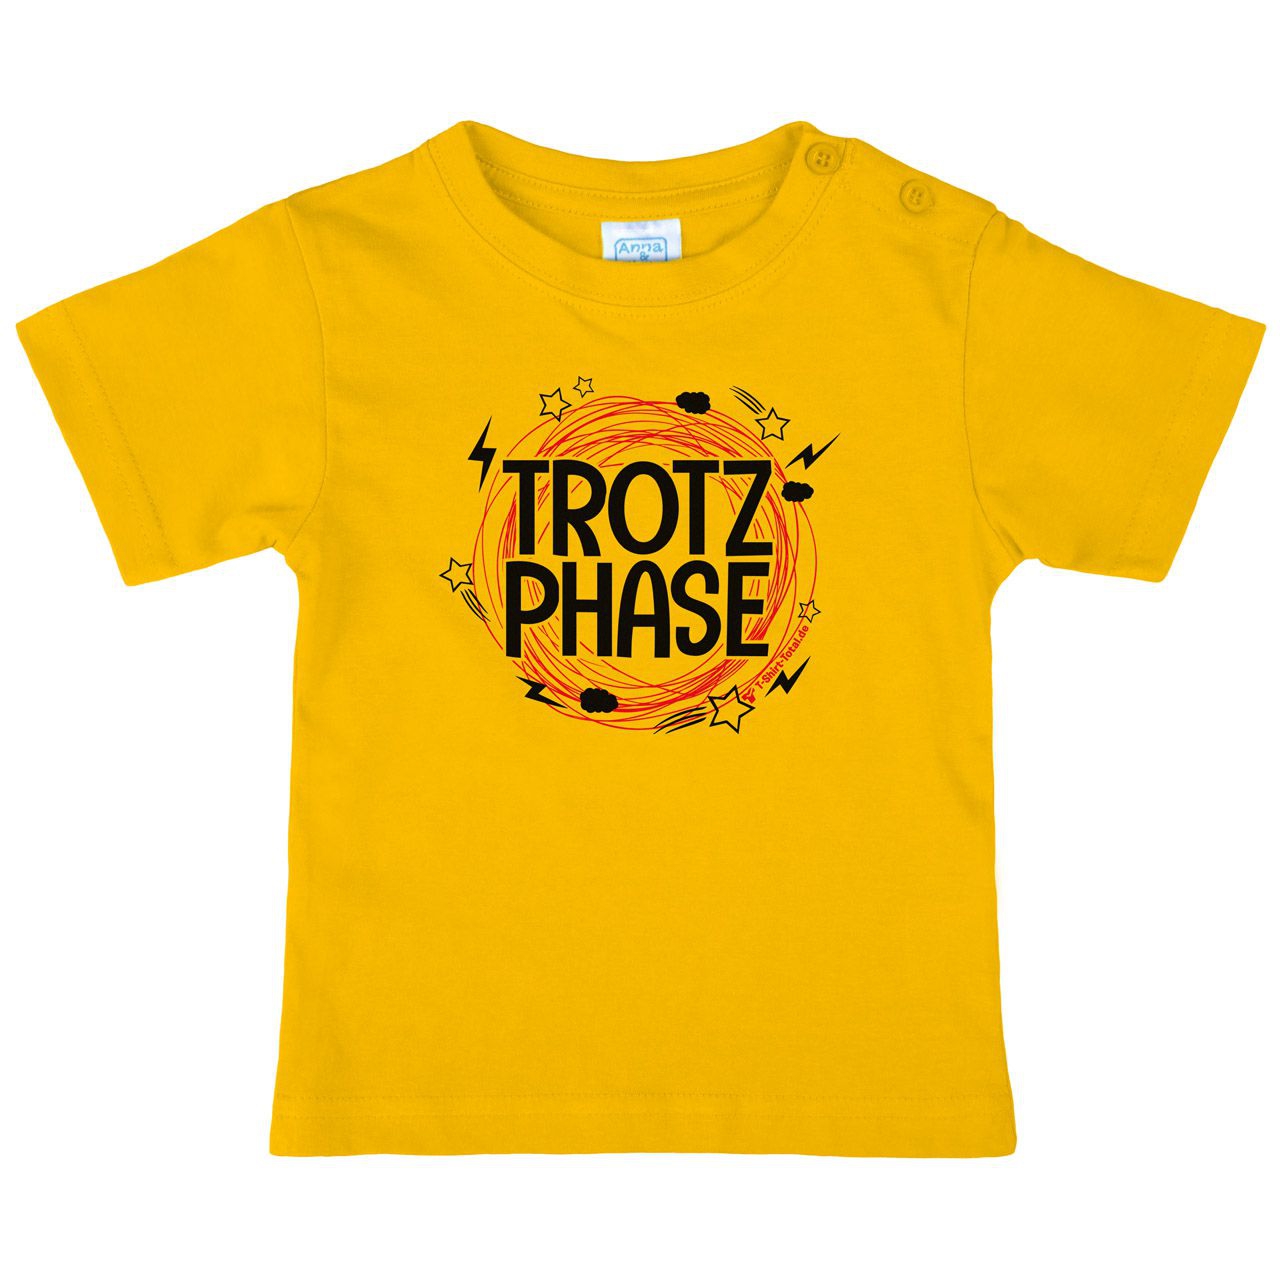 Trotzphase Kinder T-Shirt gelb 104